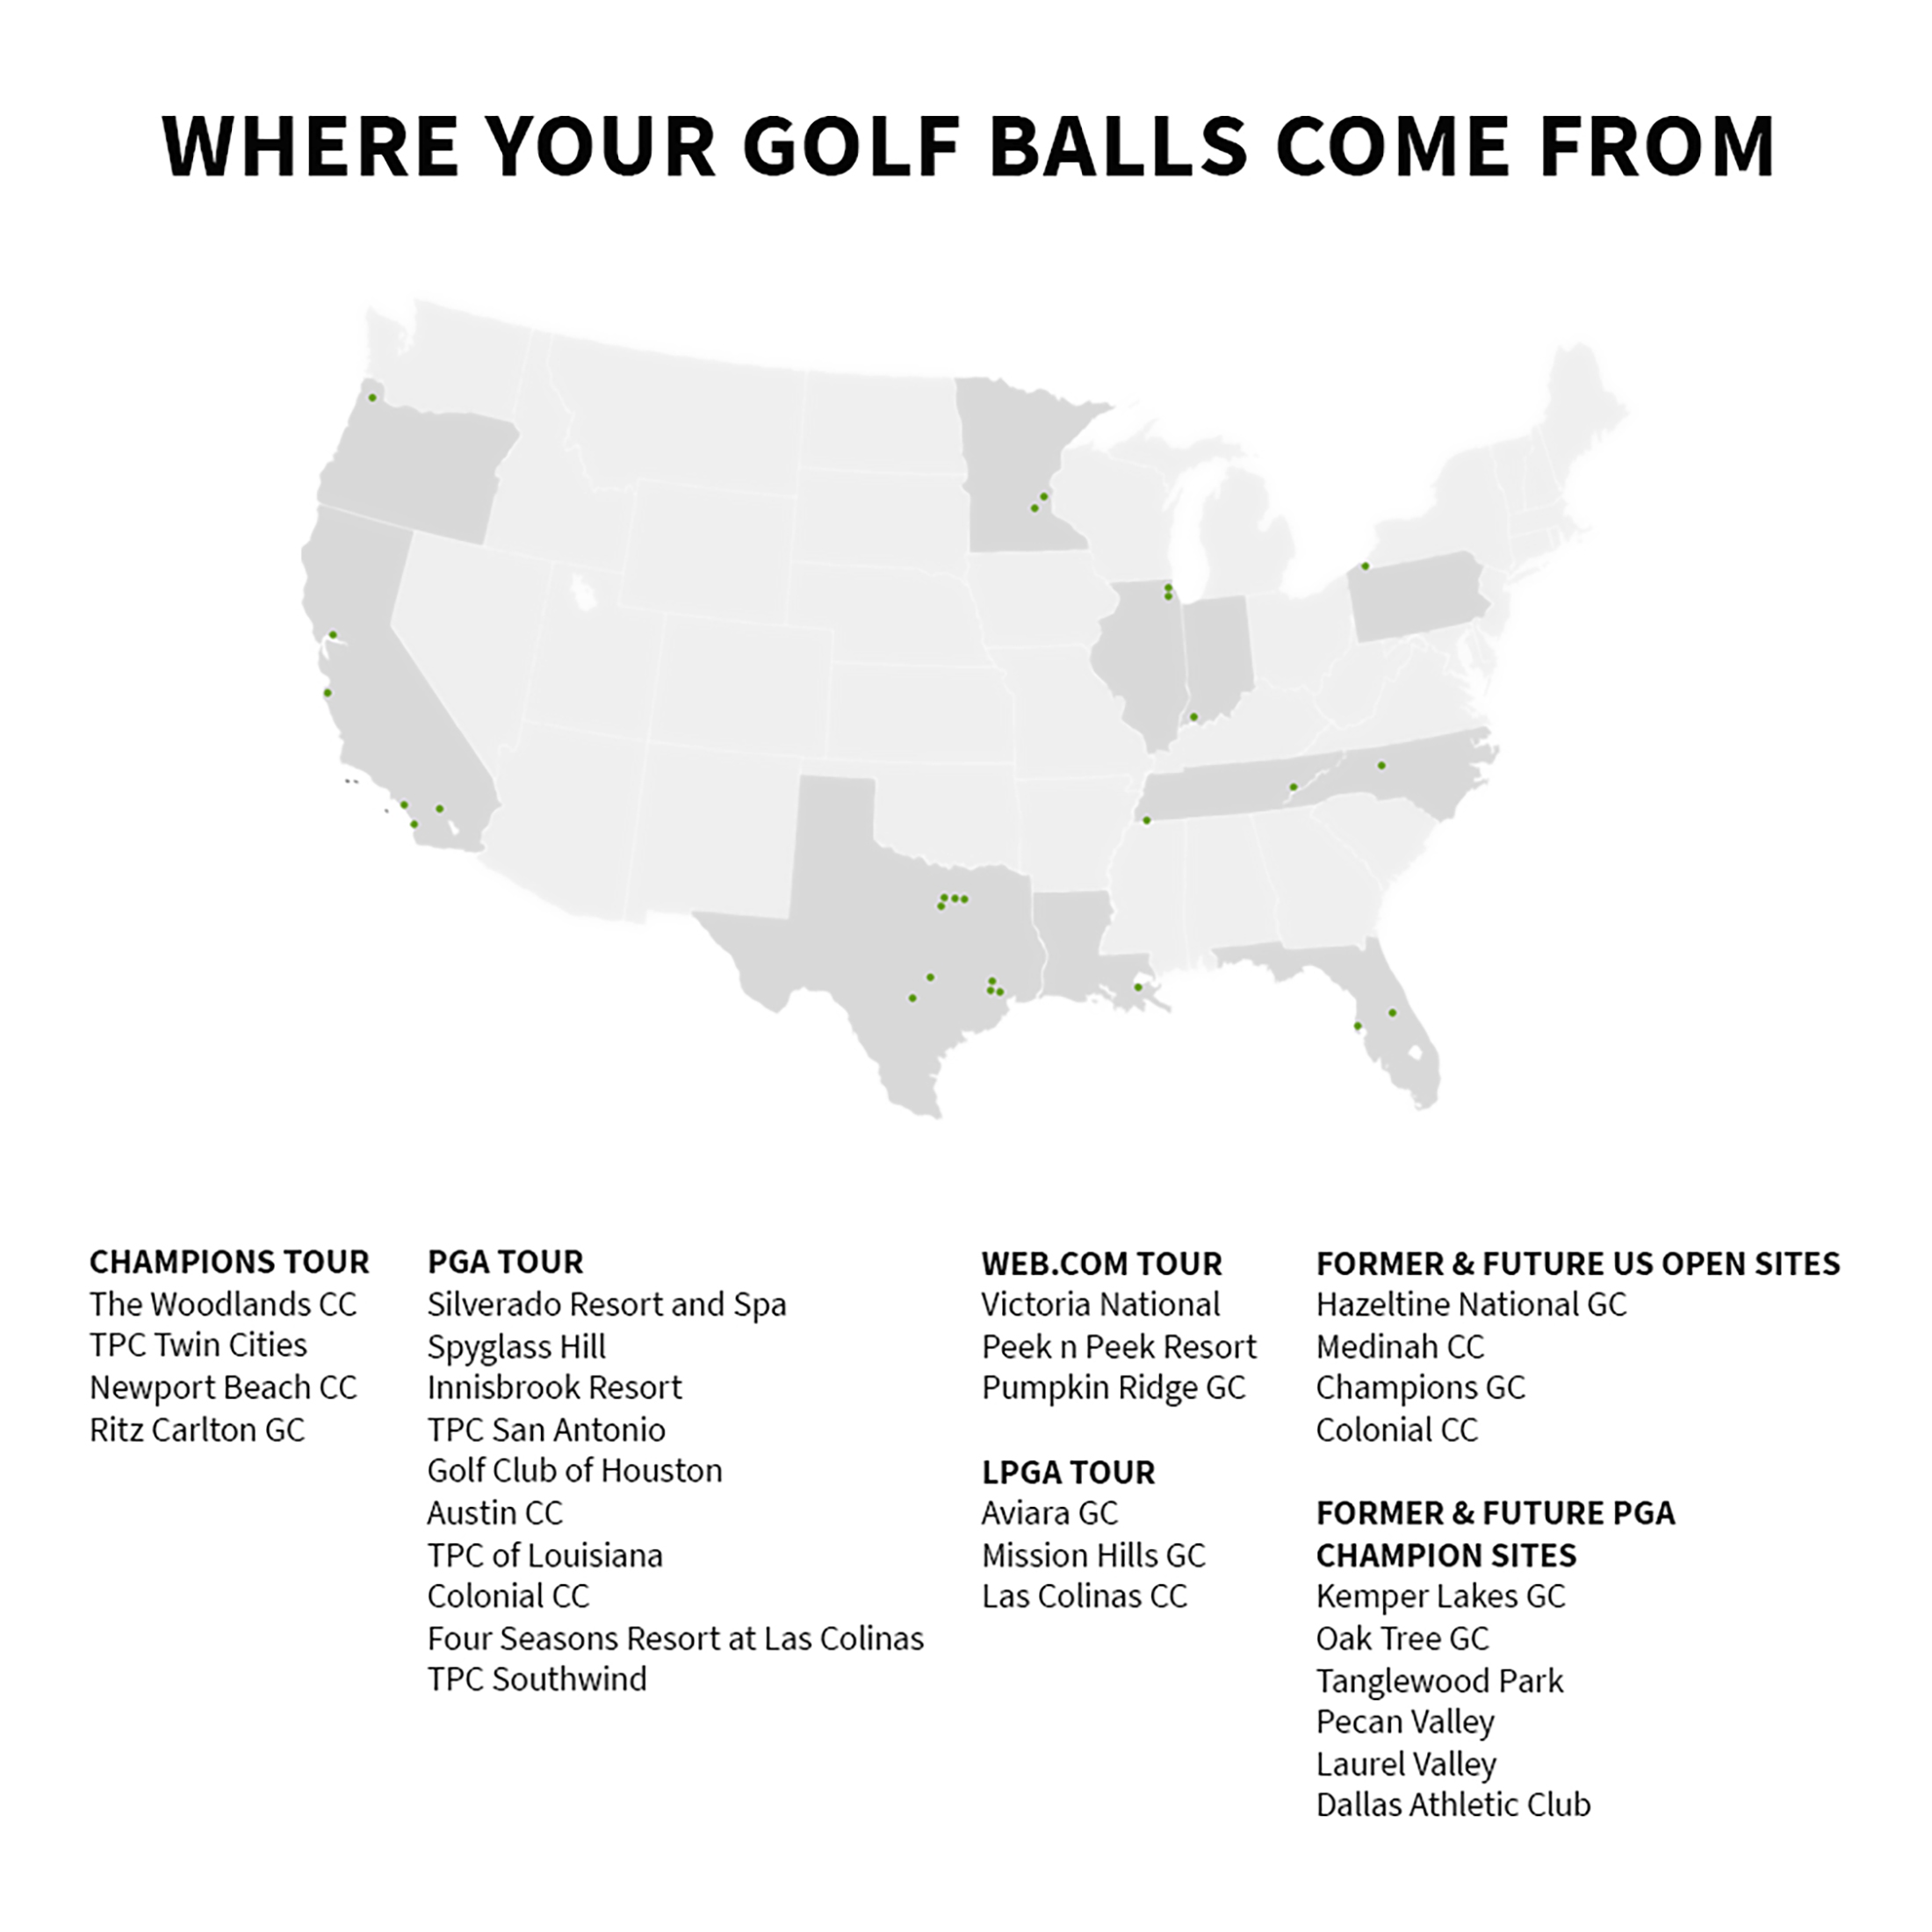 Srixon Z-Star Golf Balls, Good Quality, 50 Pack, by Hunter Golf - image 4 of 9